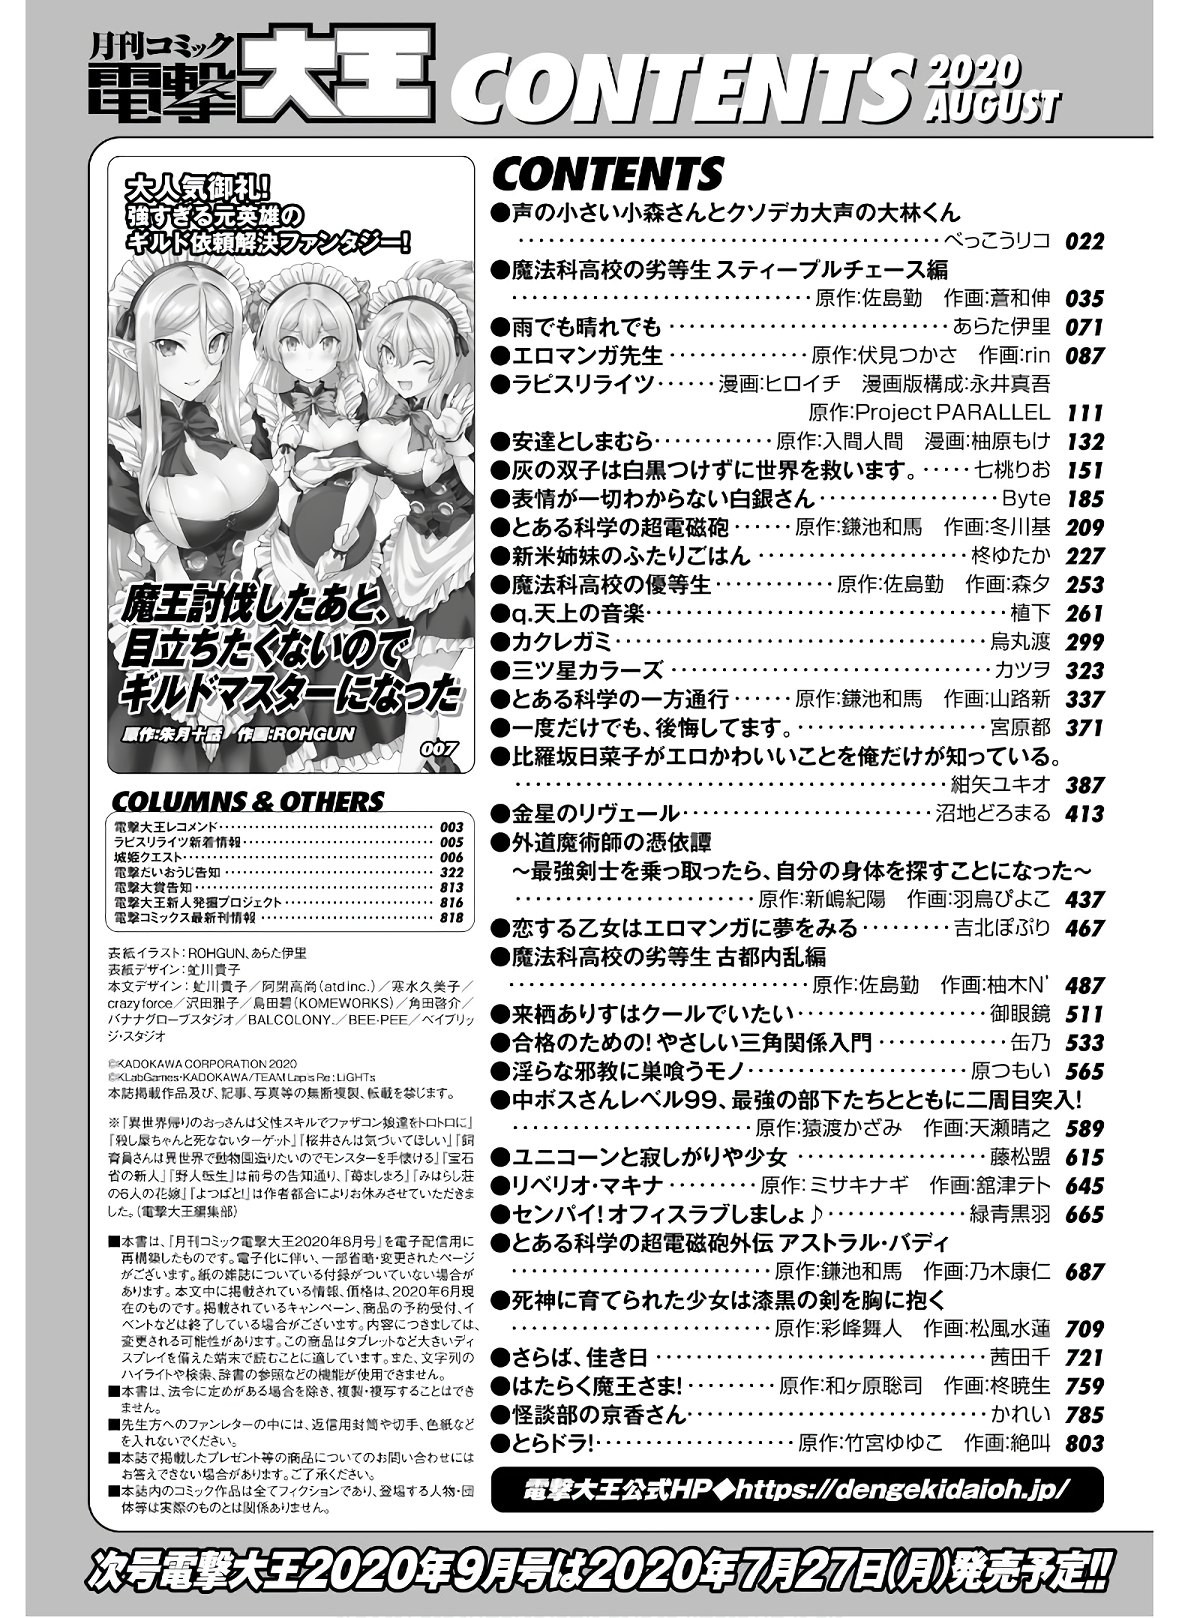 Dengeki Daioh - Chapter 2020-08 - Page 2